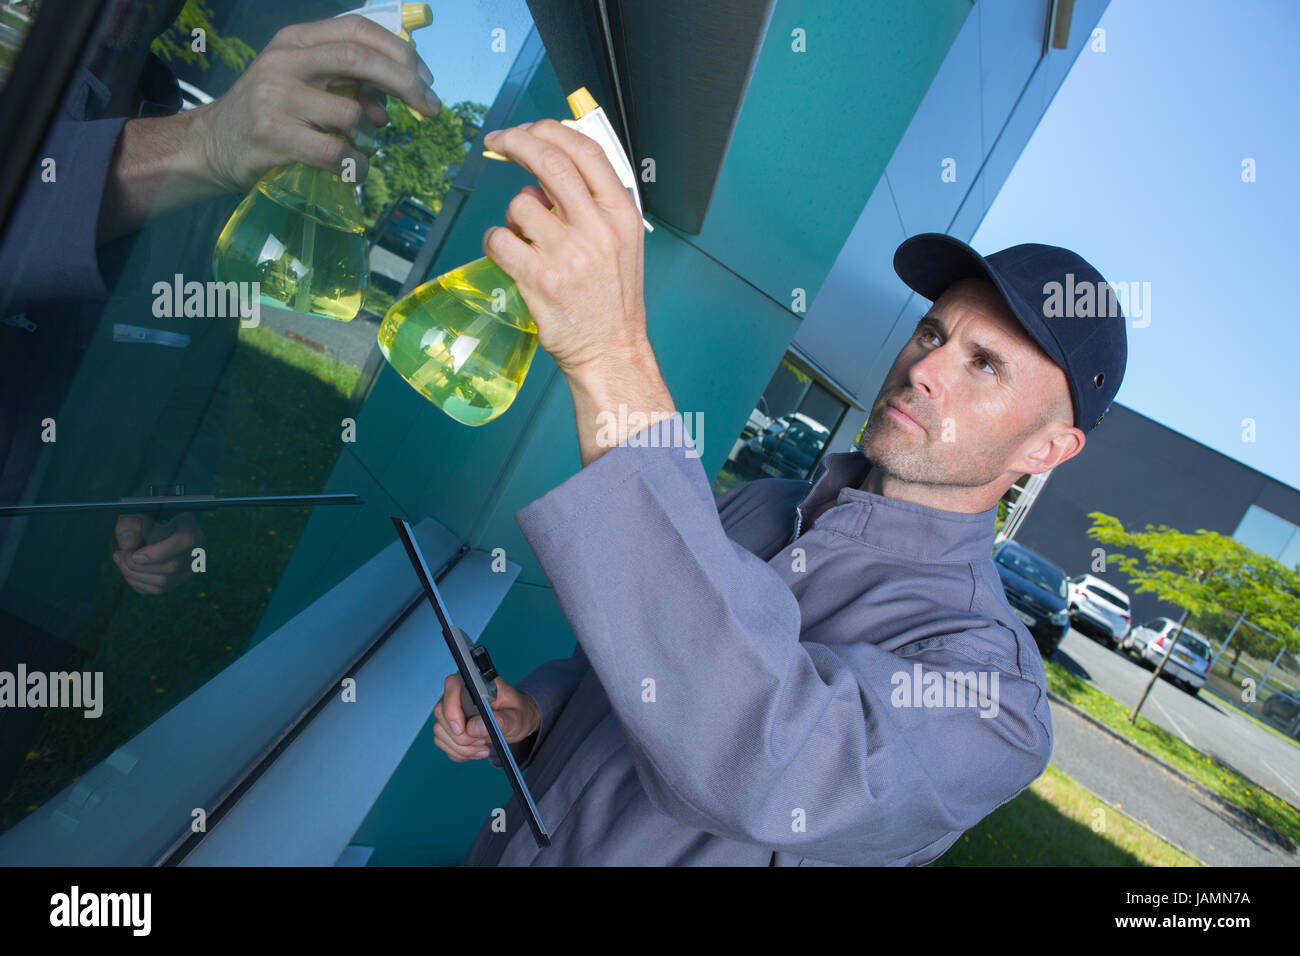 man cleaning windows Stock Photo